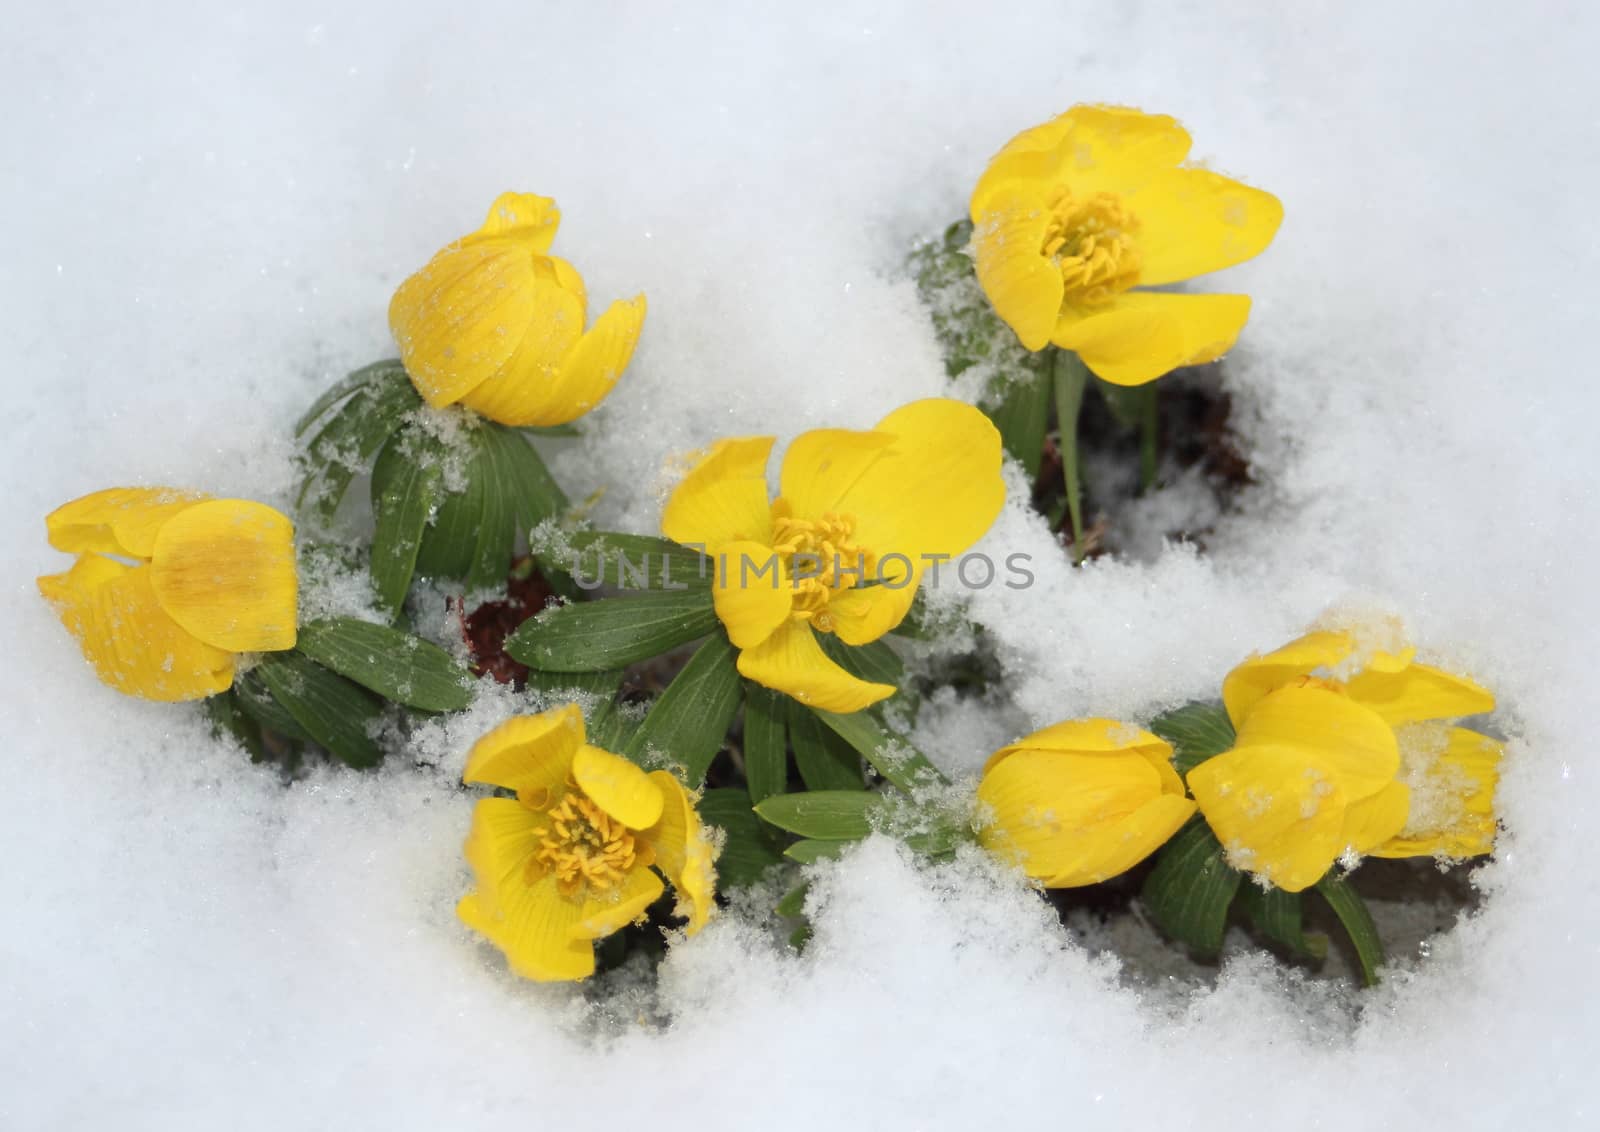 Yellow eranthis flower in snowy garden in early spring